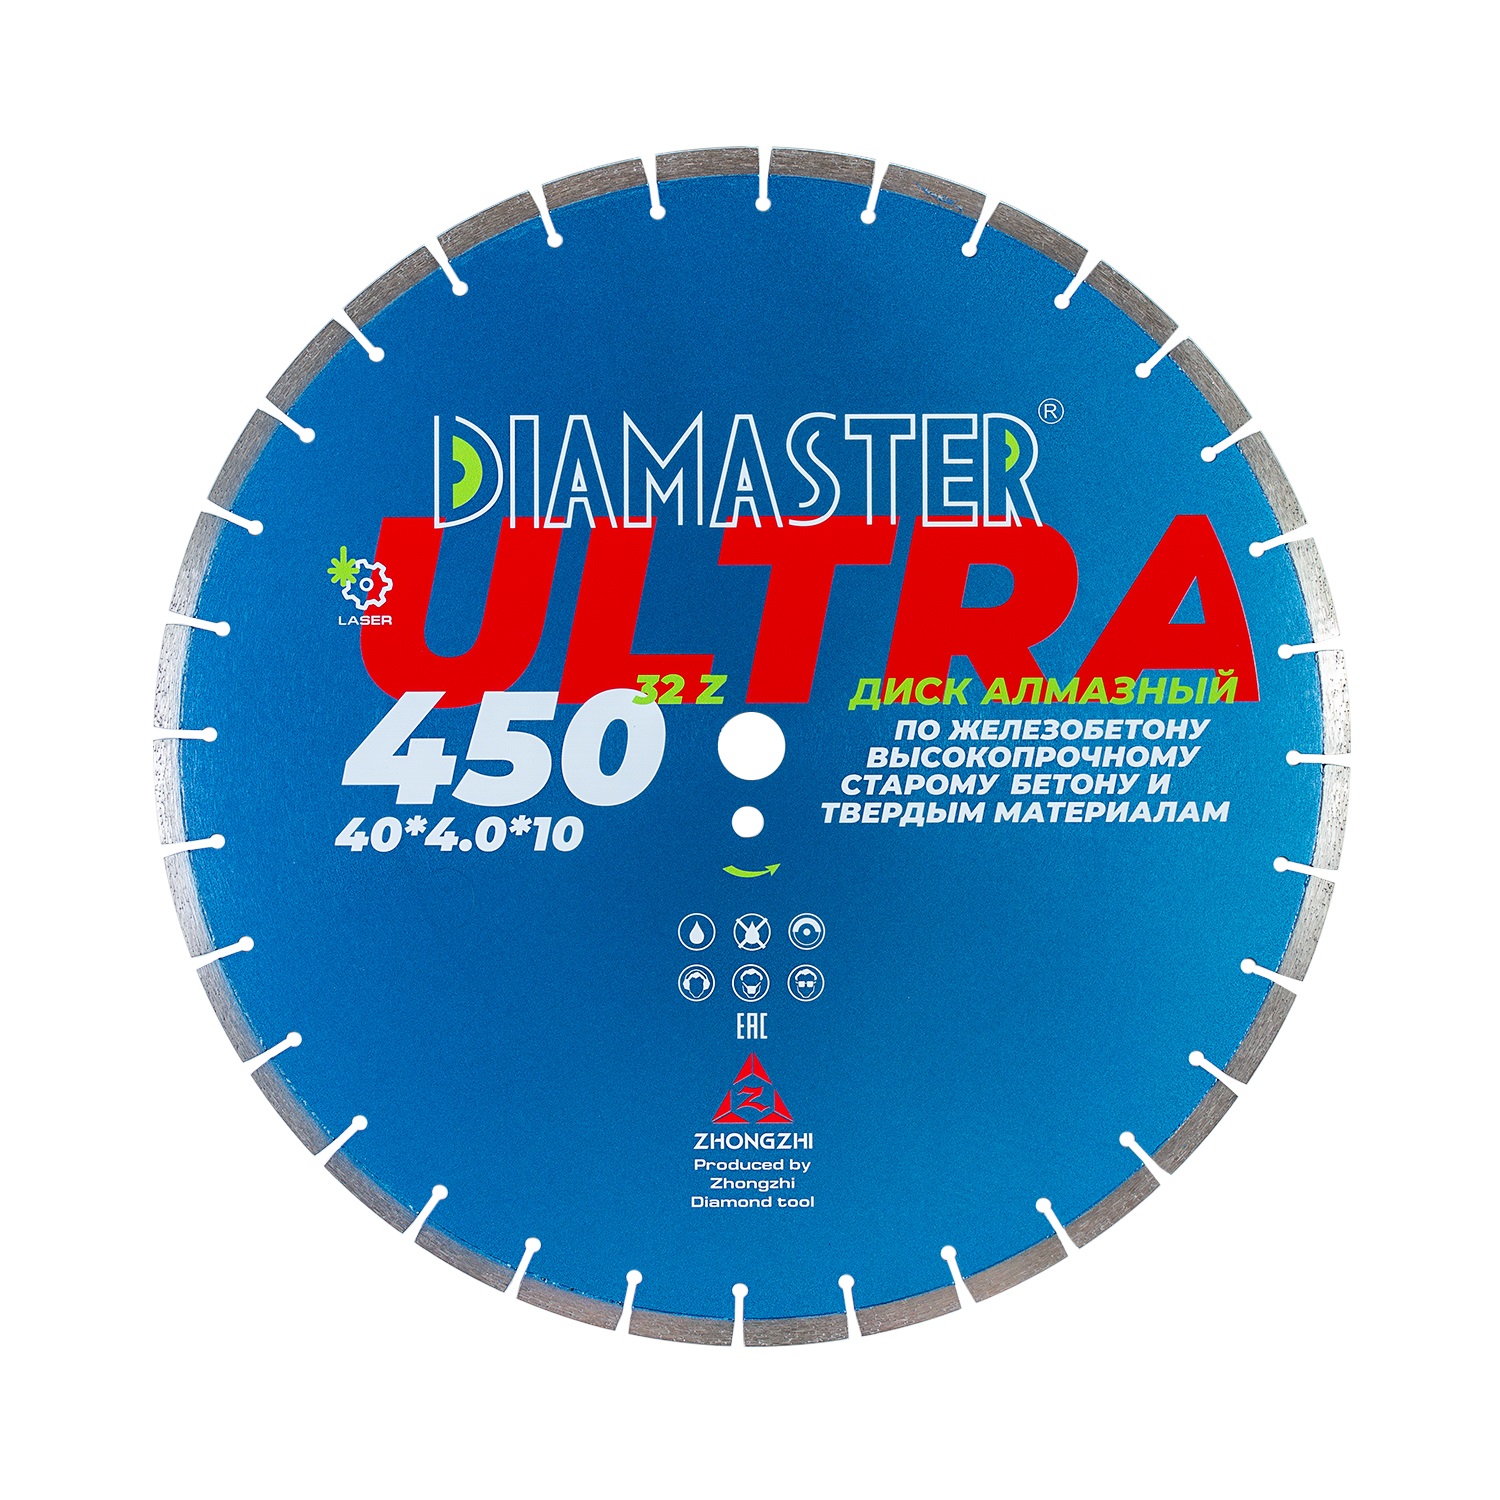 Диск сегментный Laser ULTRA д.450*2,8*25,4 (40*4,0*10)мм | 32z/железобетон/wet/dry DIAMASTER синтетическая замша ultra chamois 43х64 см azard group